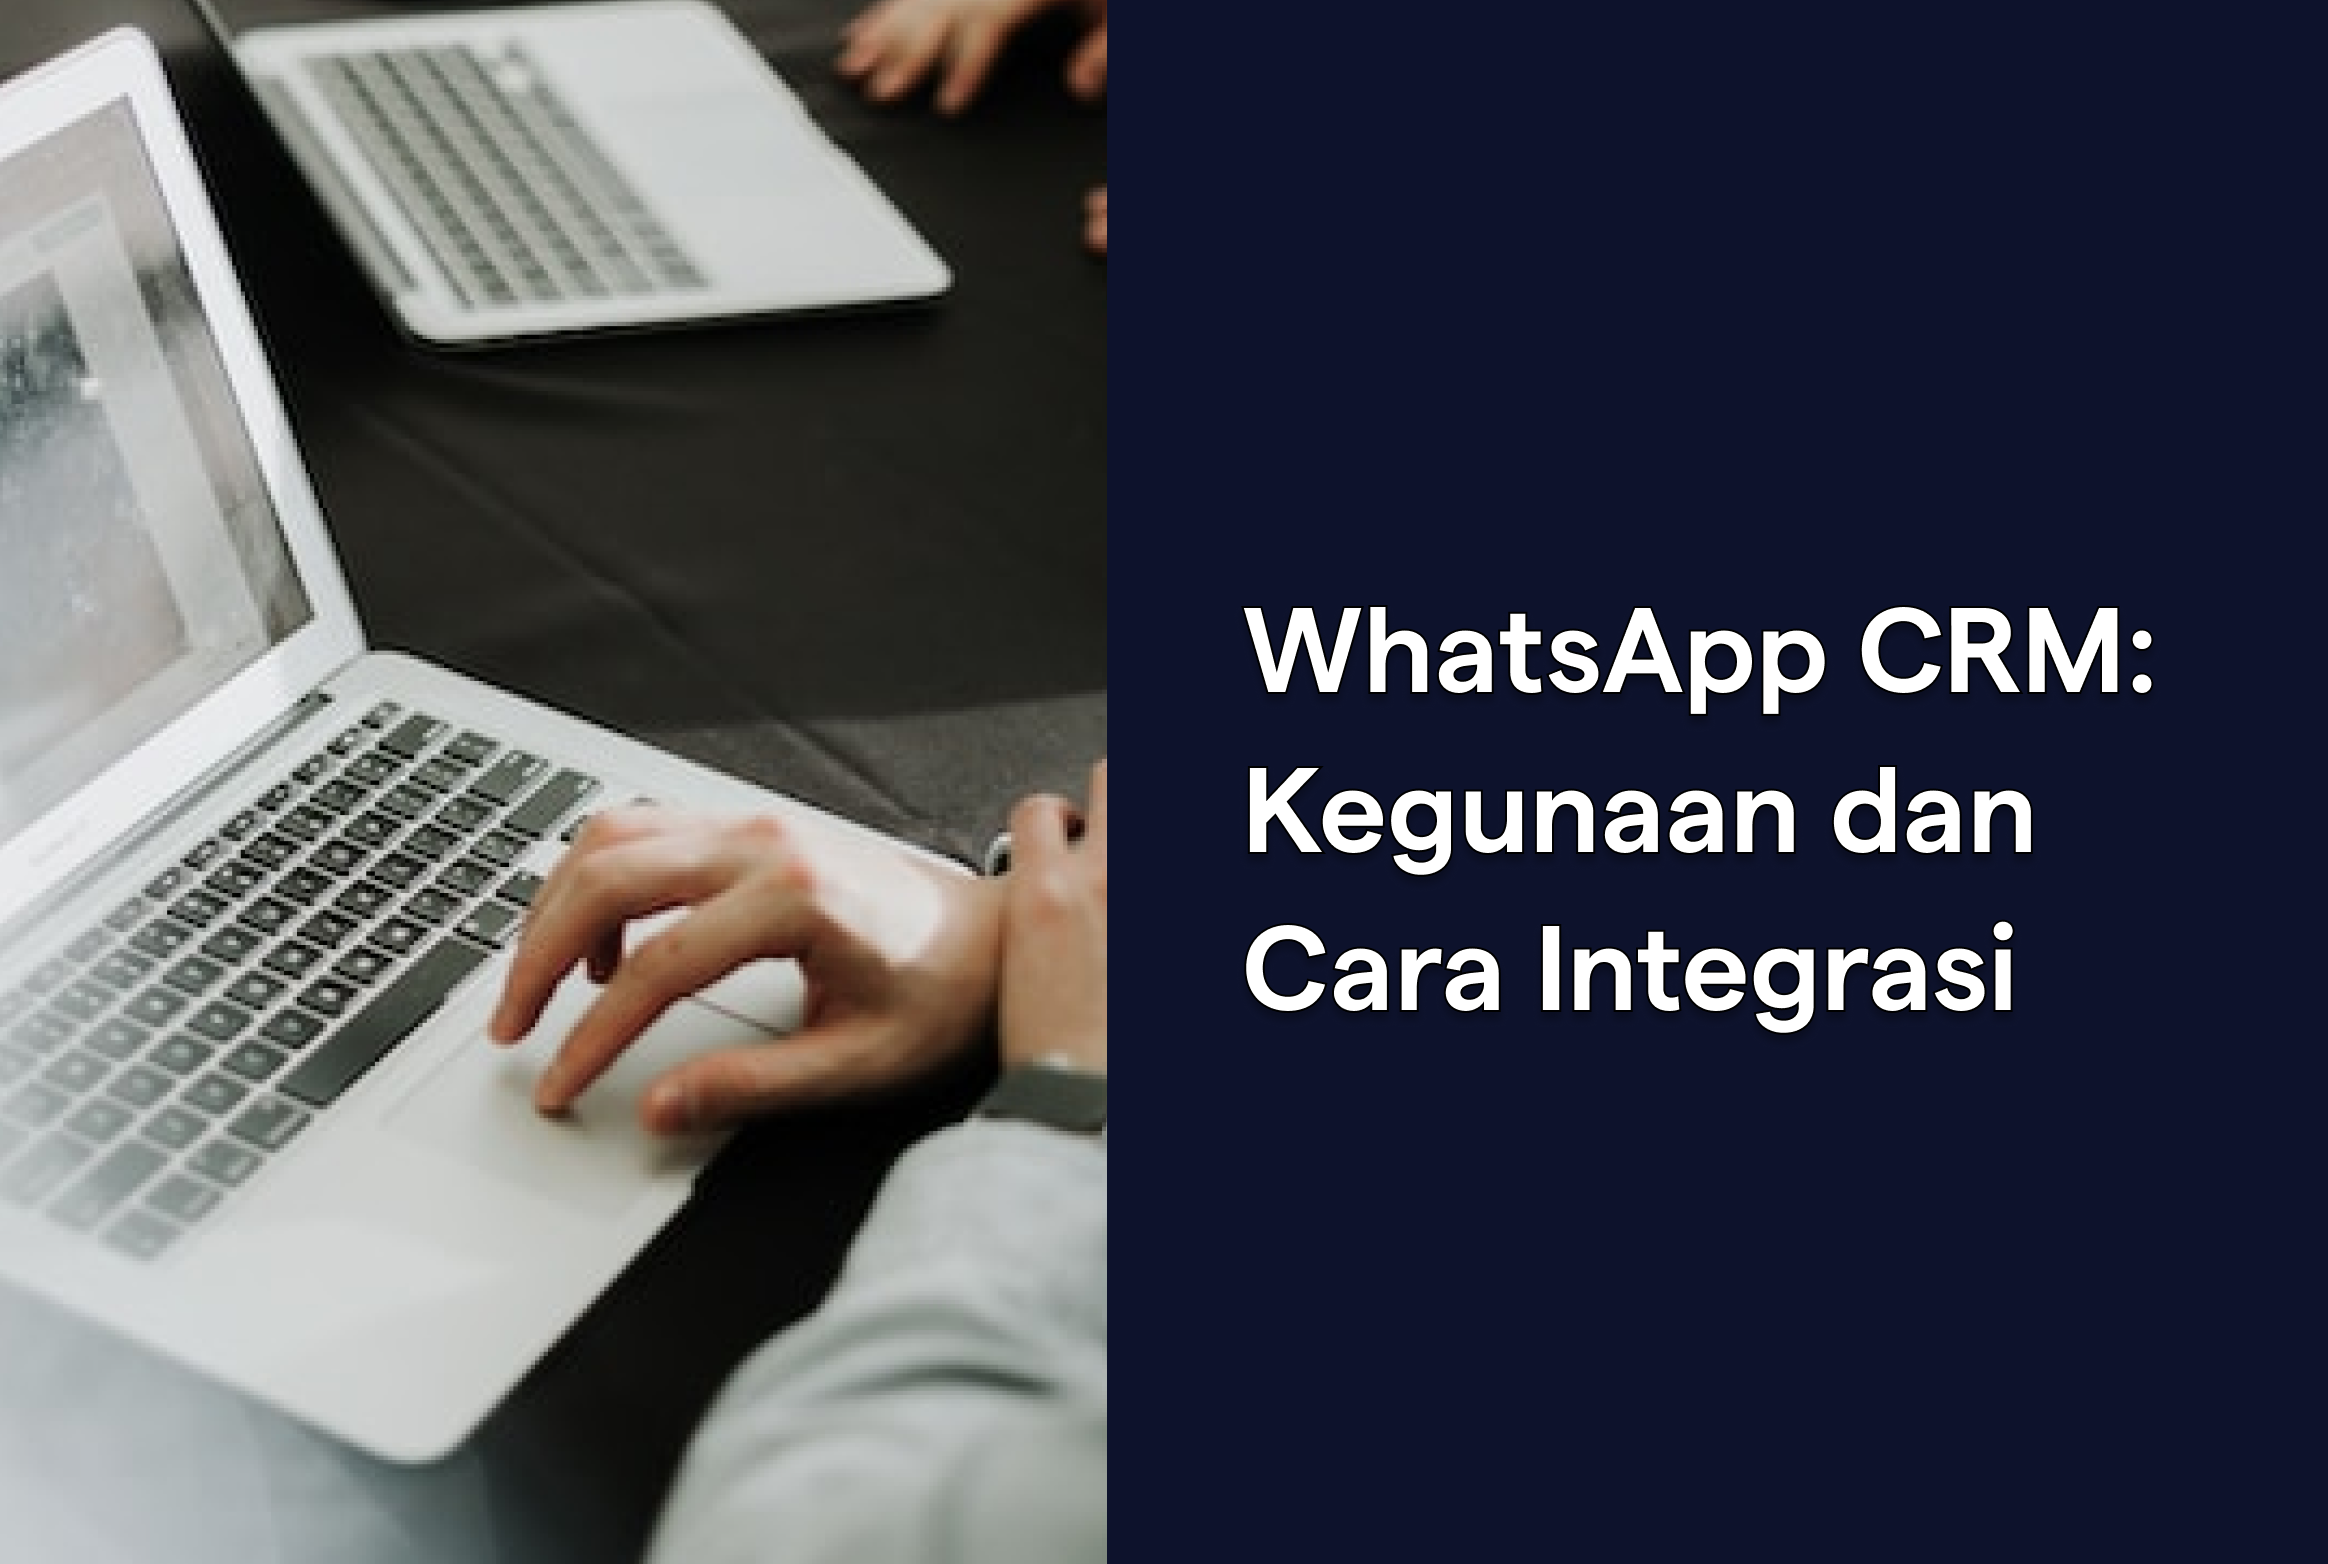 WhatsApp CRM: Kegunaan dan Cara Mengintegrasikannya